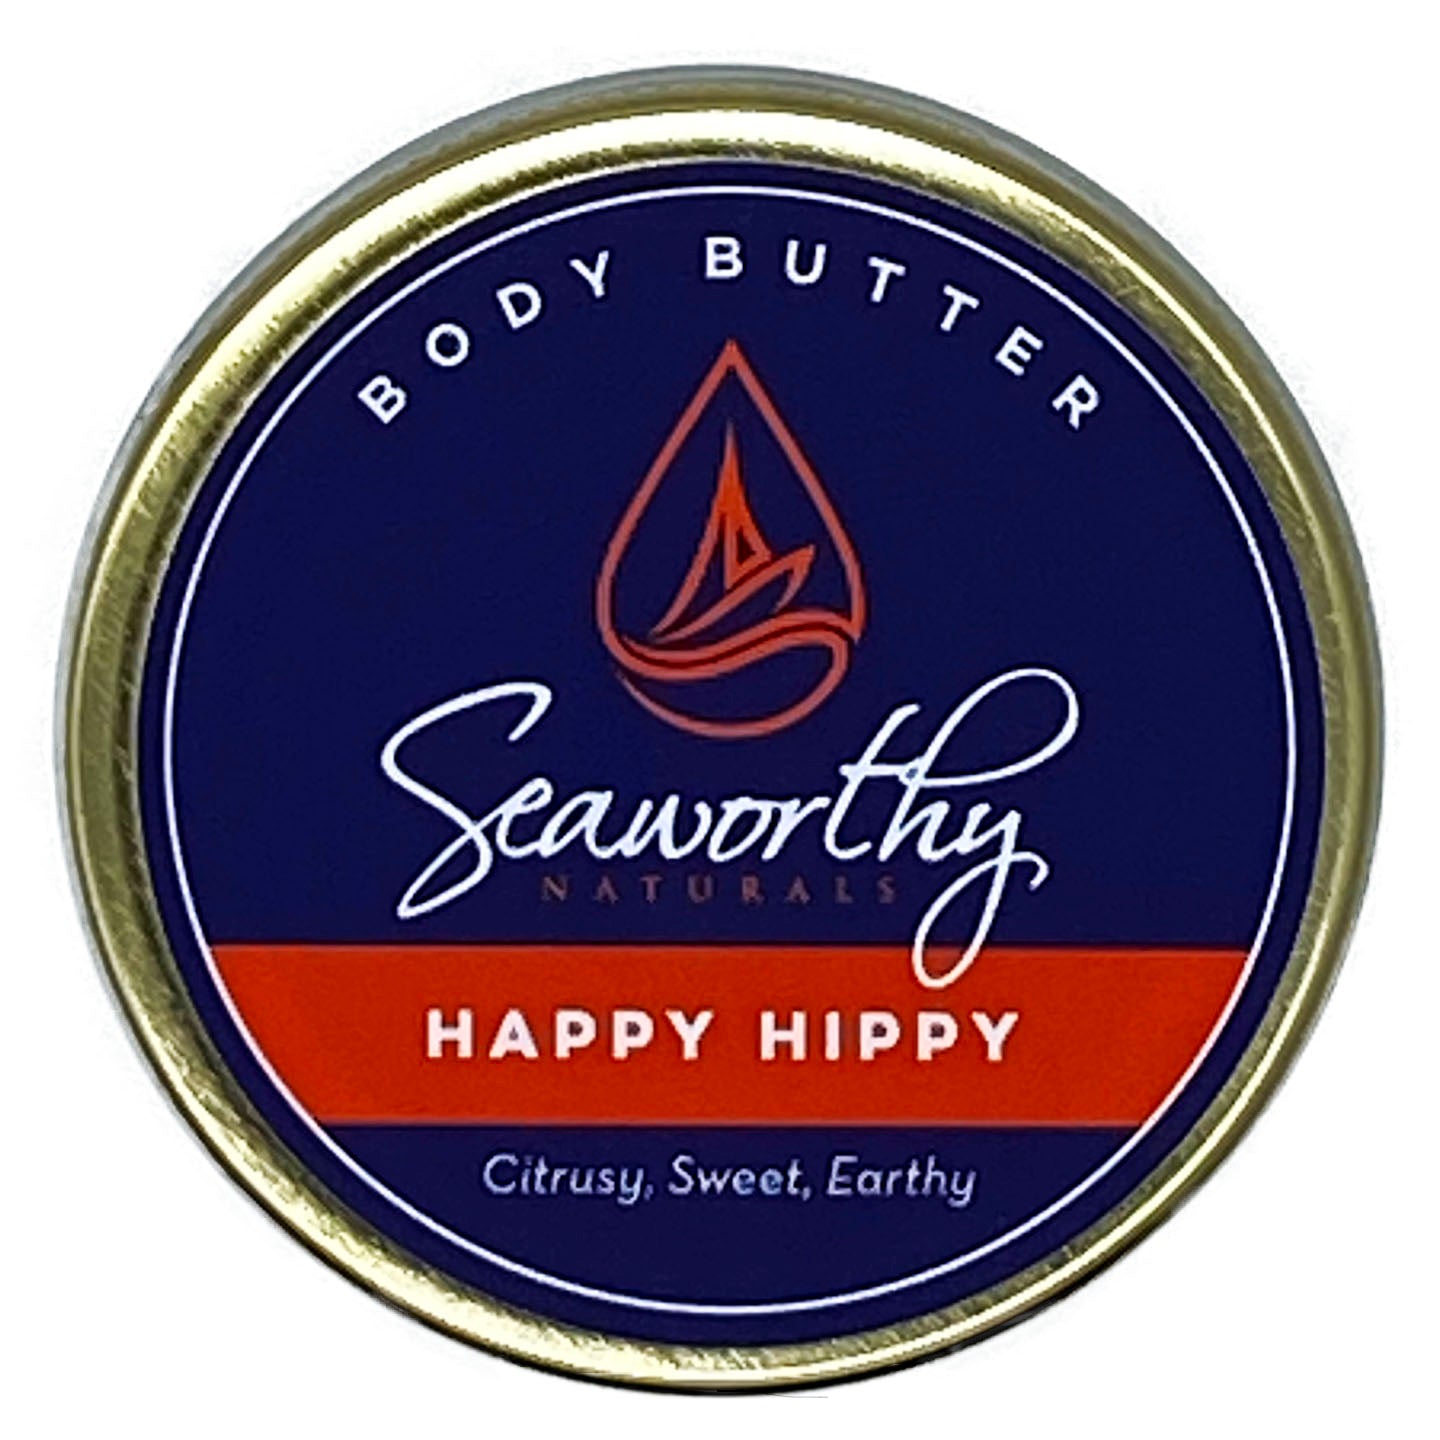 Happy Hippy body butter